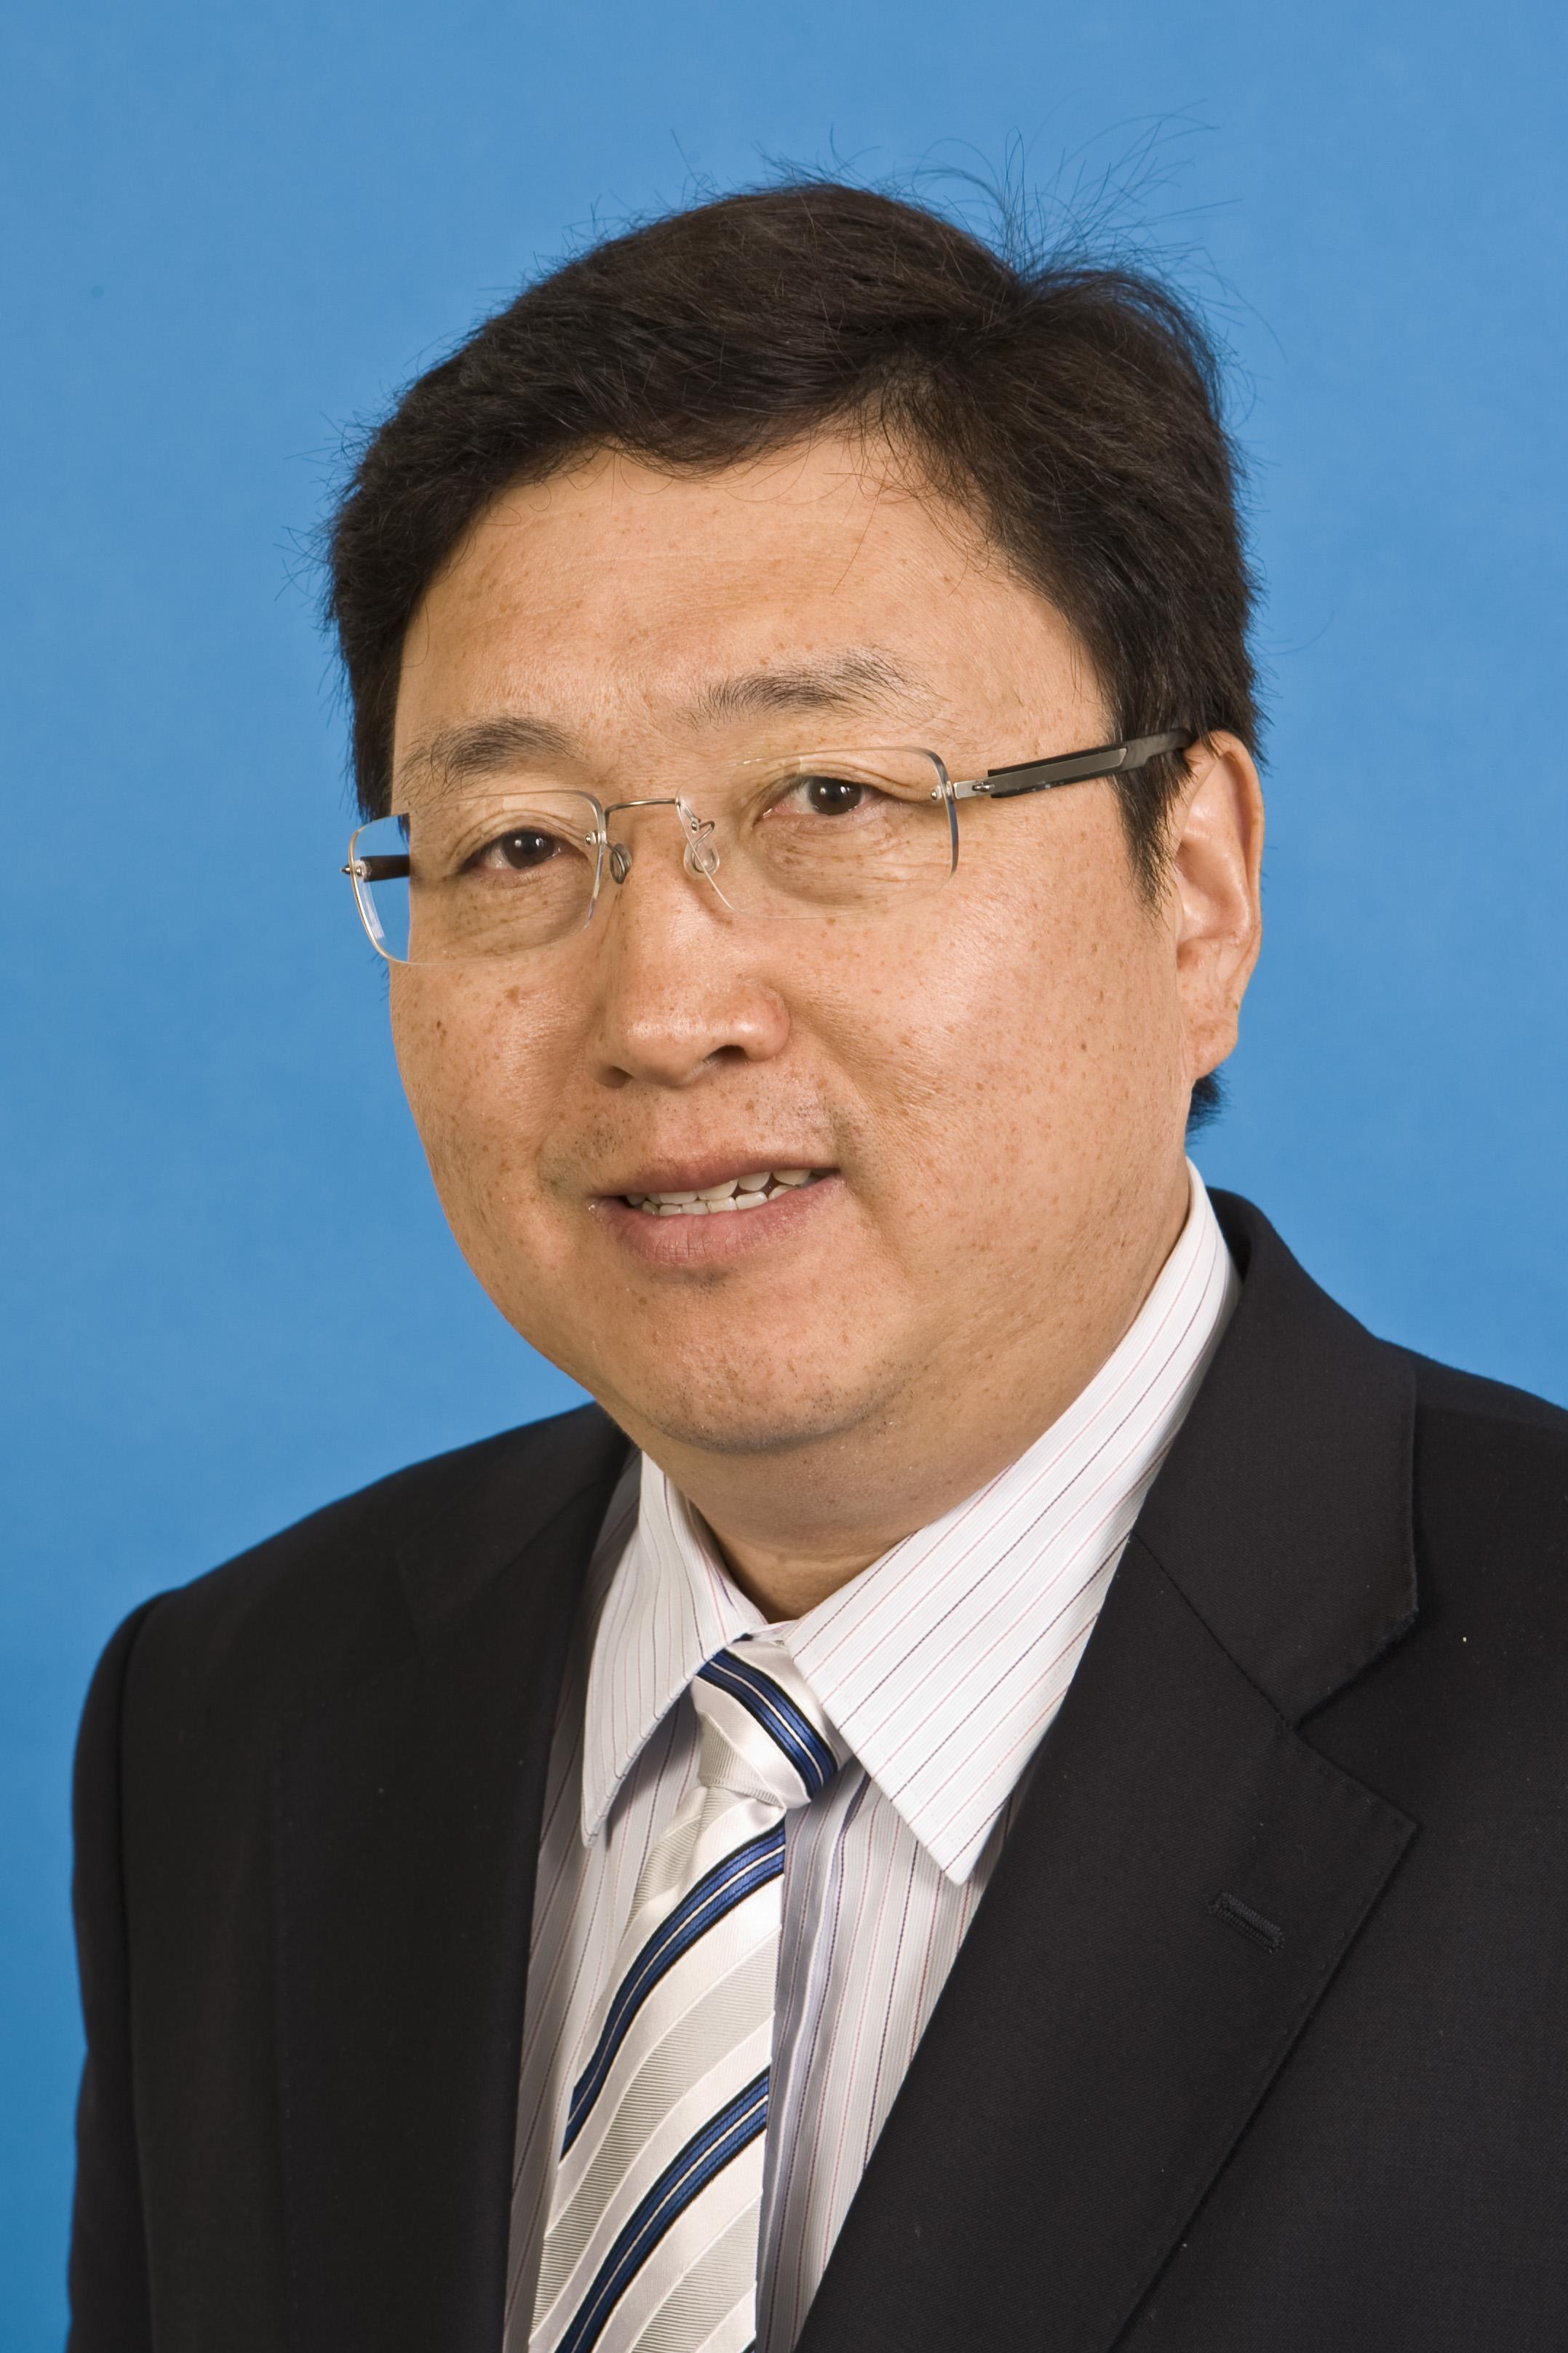 Professor Qiao (male) in black jacket, striped tie, glasses, facing camera